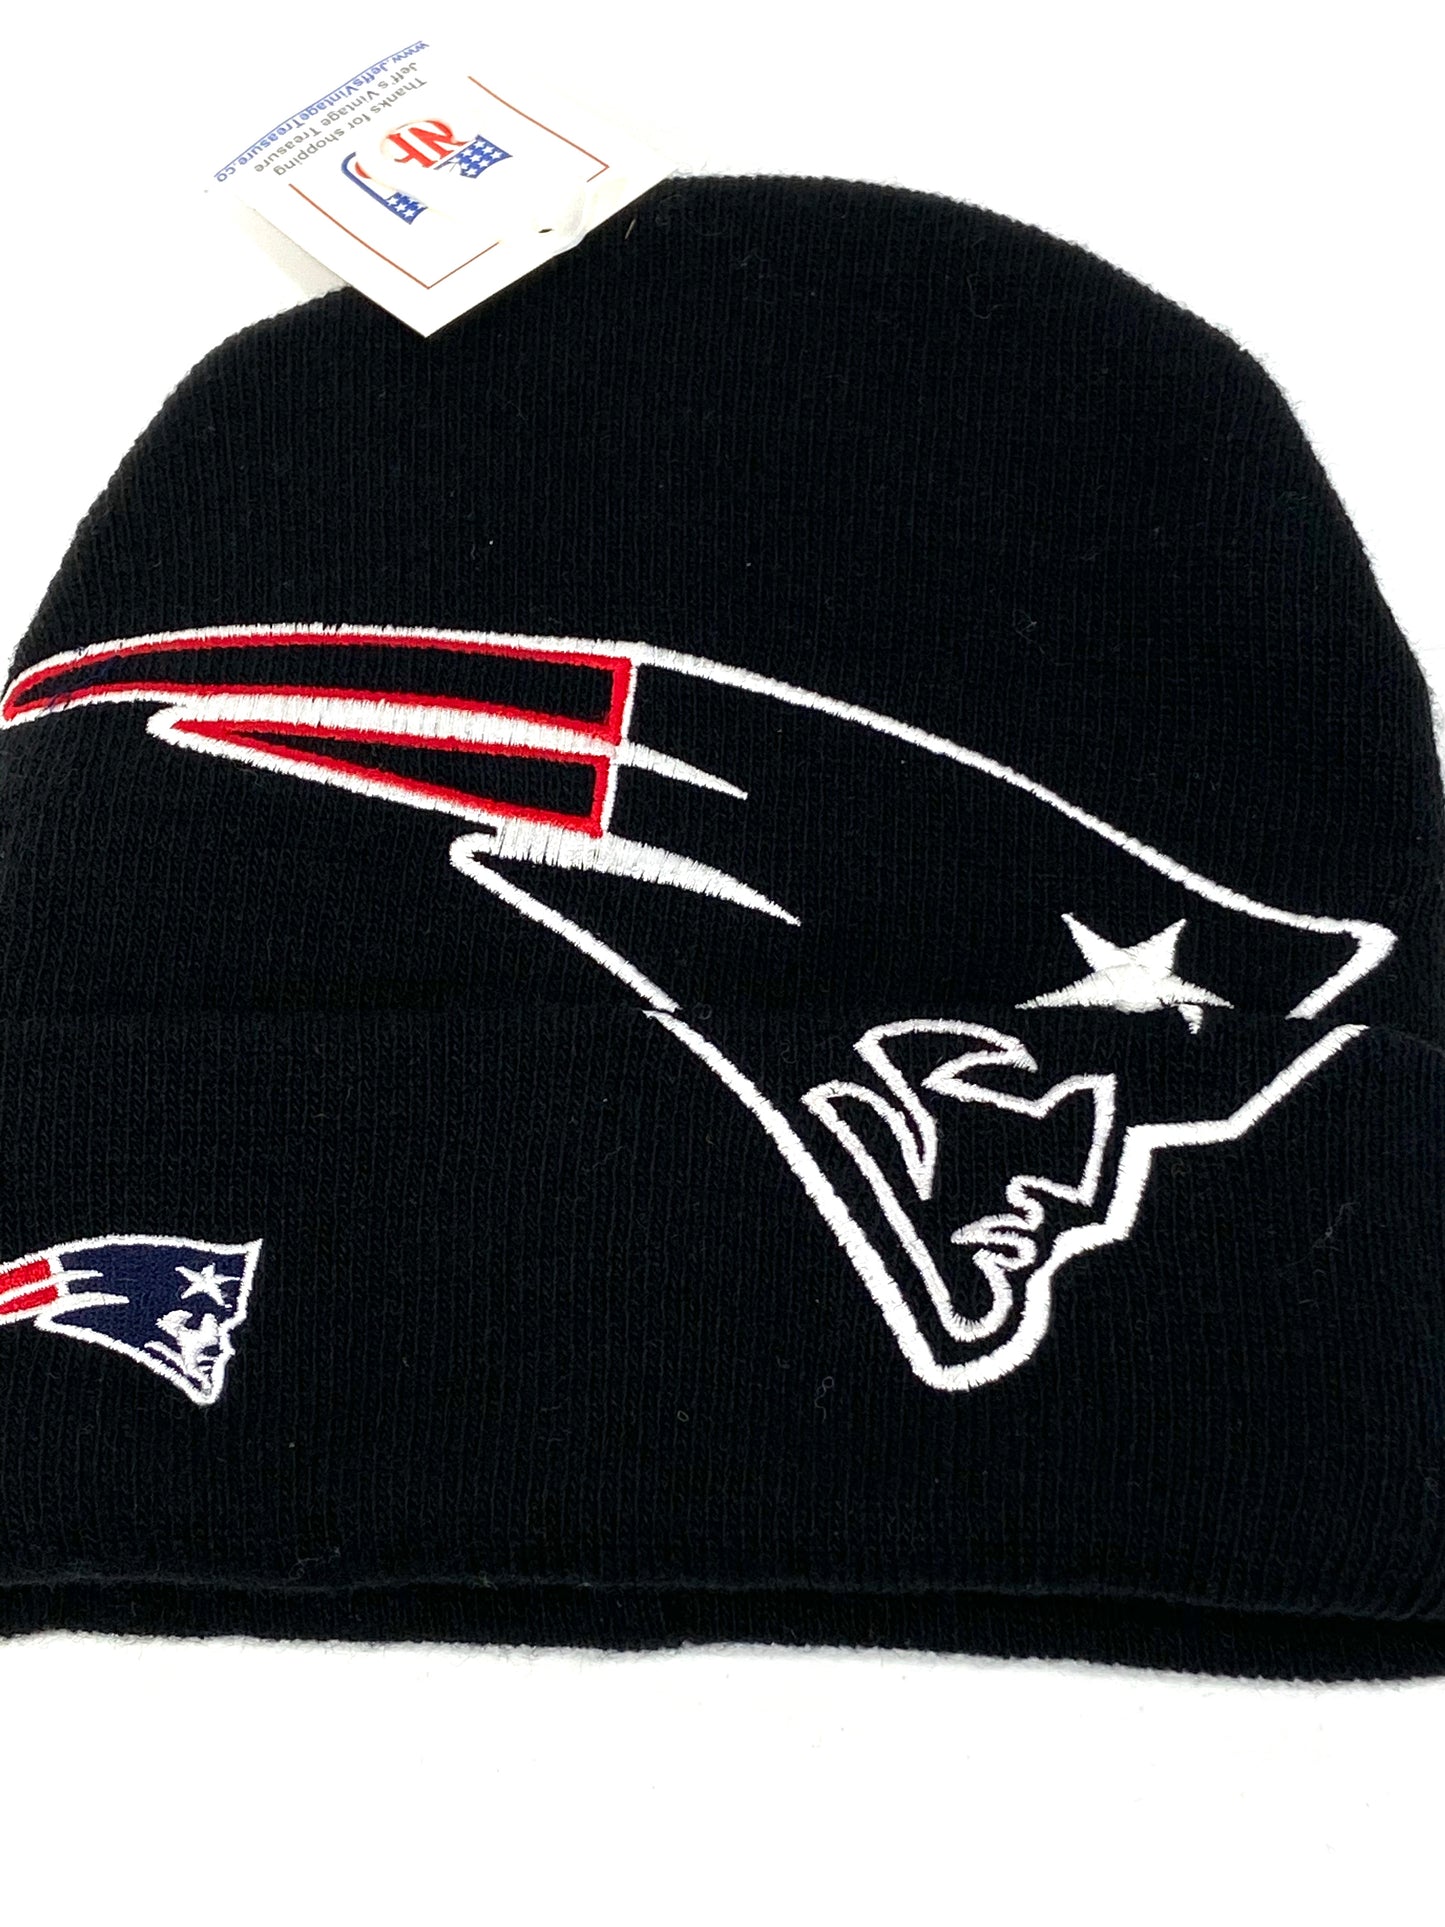 New England Patriots Vintage NFL Late '90's NOS Oversize Logo Knit Hat by NFL